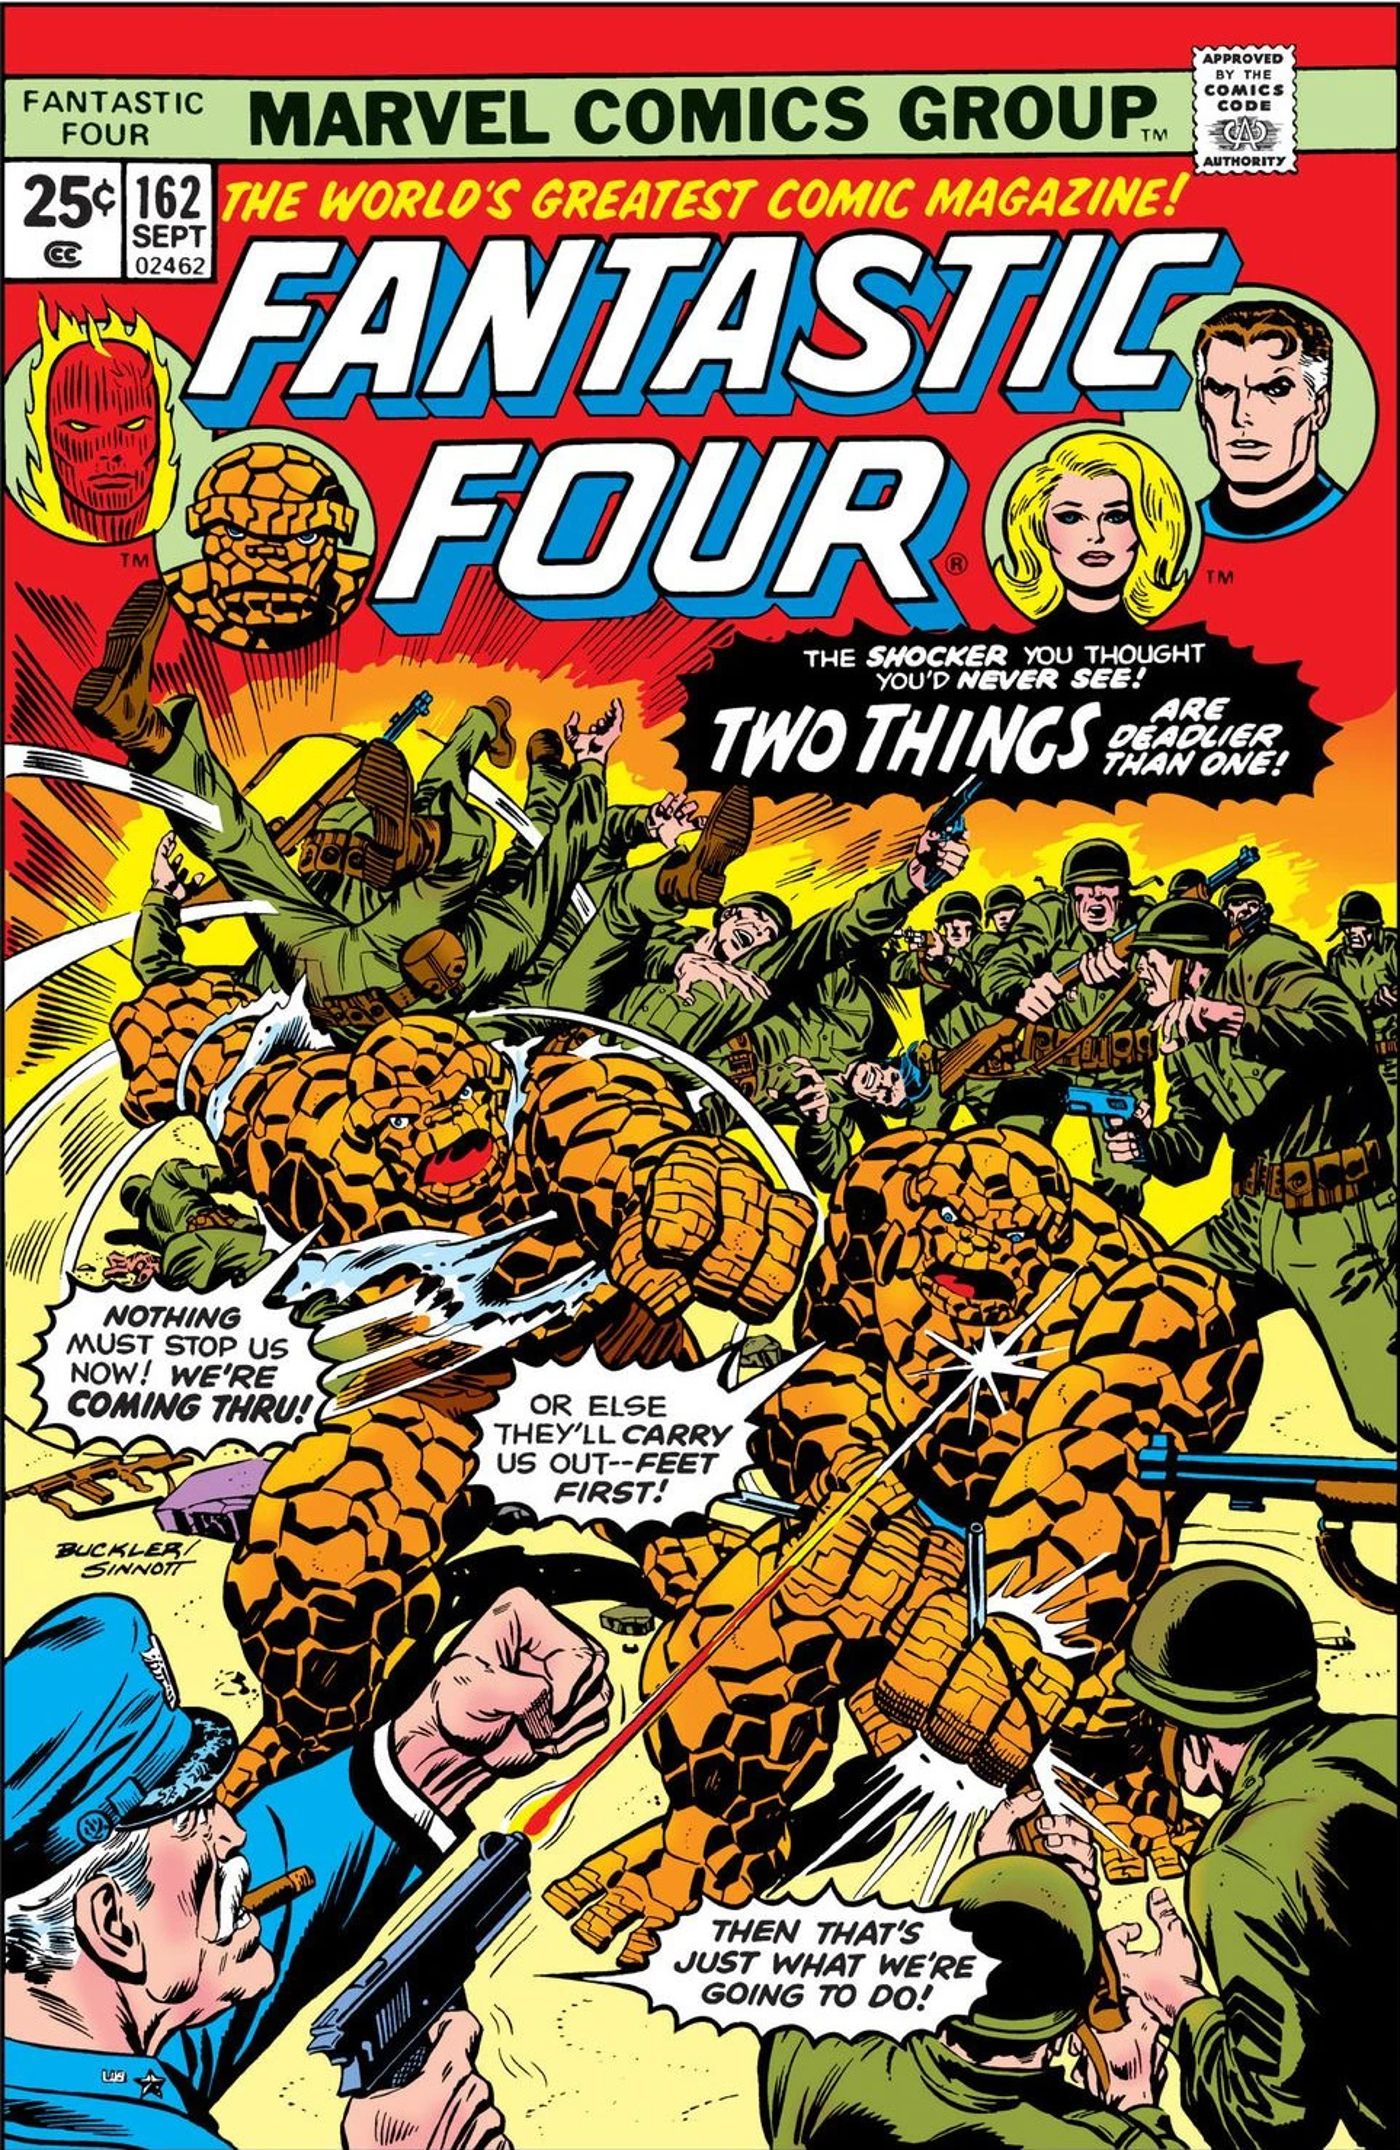 Fantastic_Four #161 cover